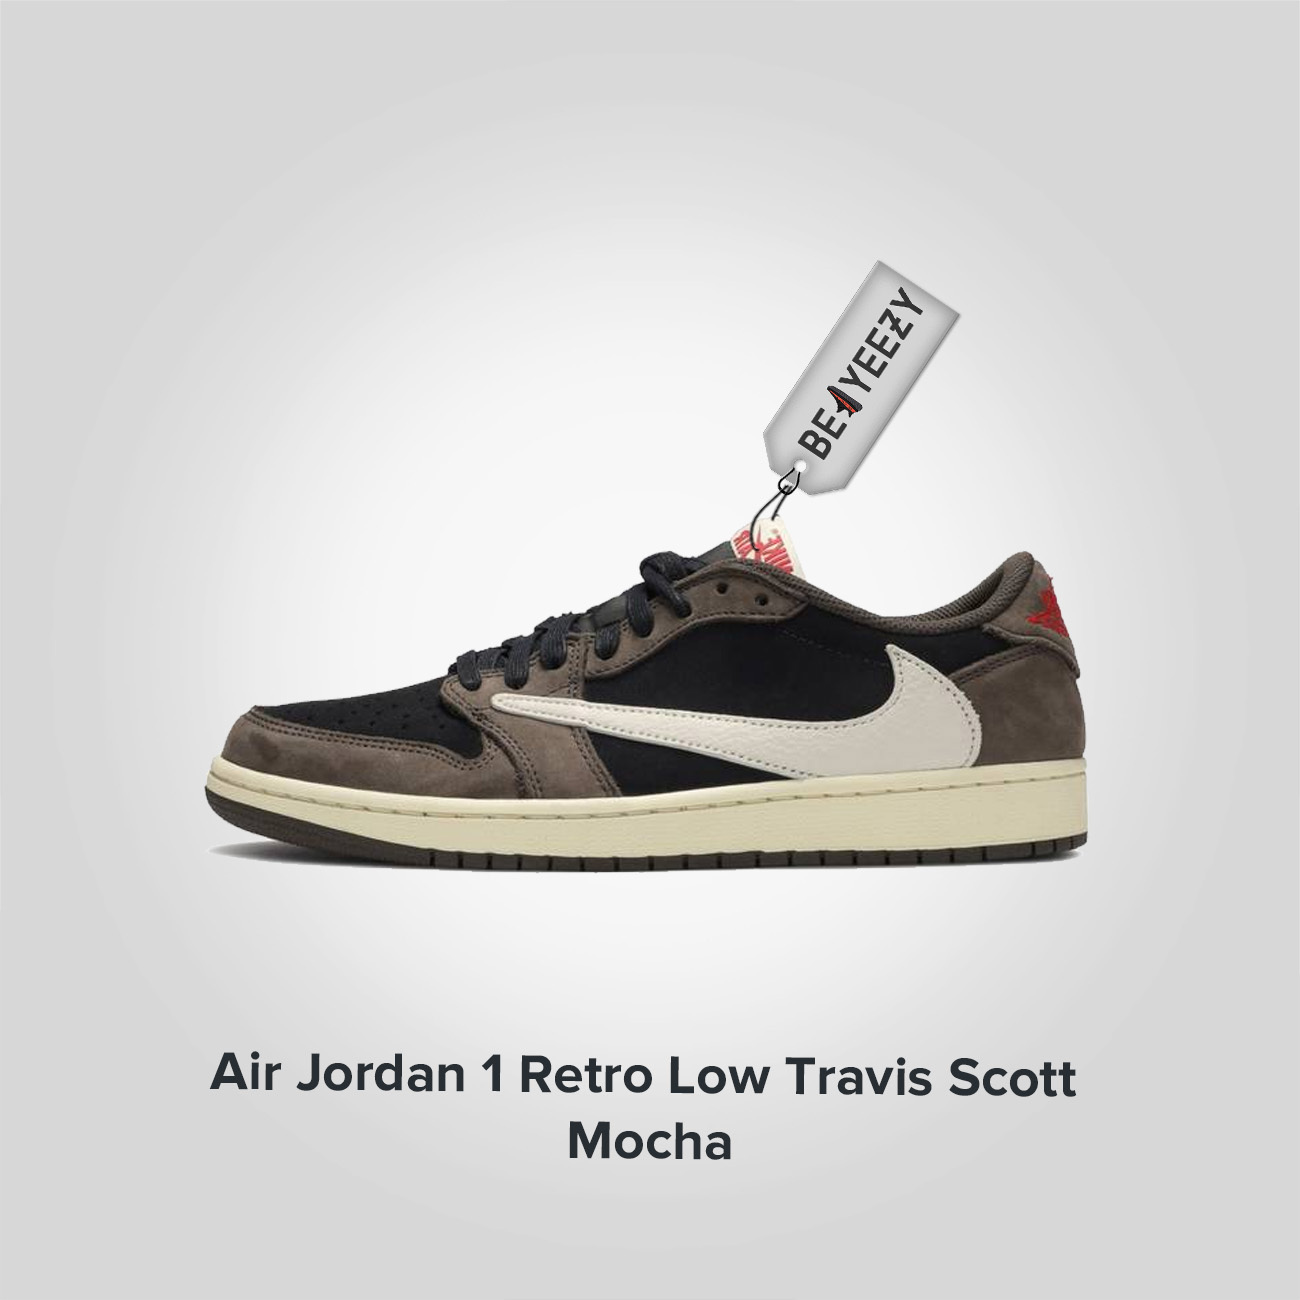 Jordan 1 Retro Low Travis Scott Mocha